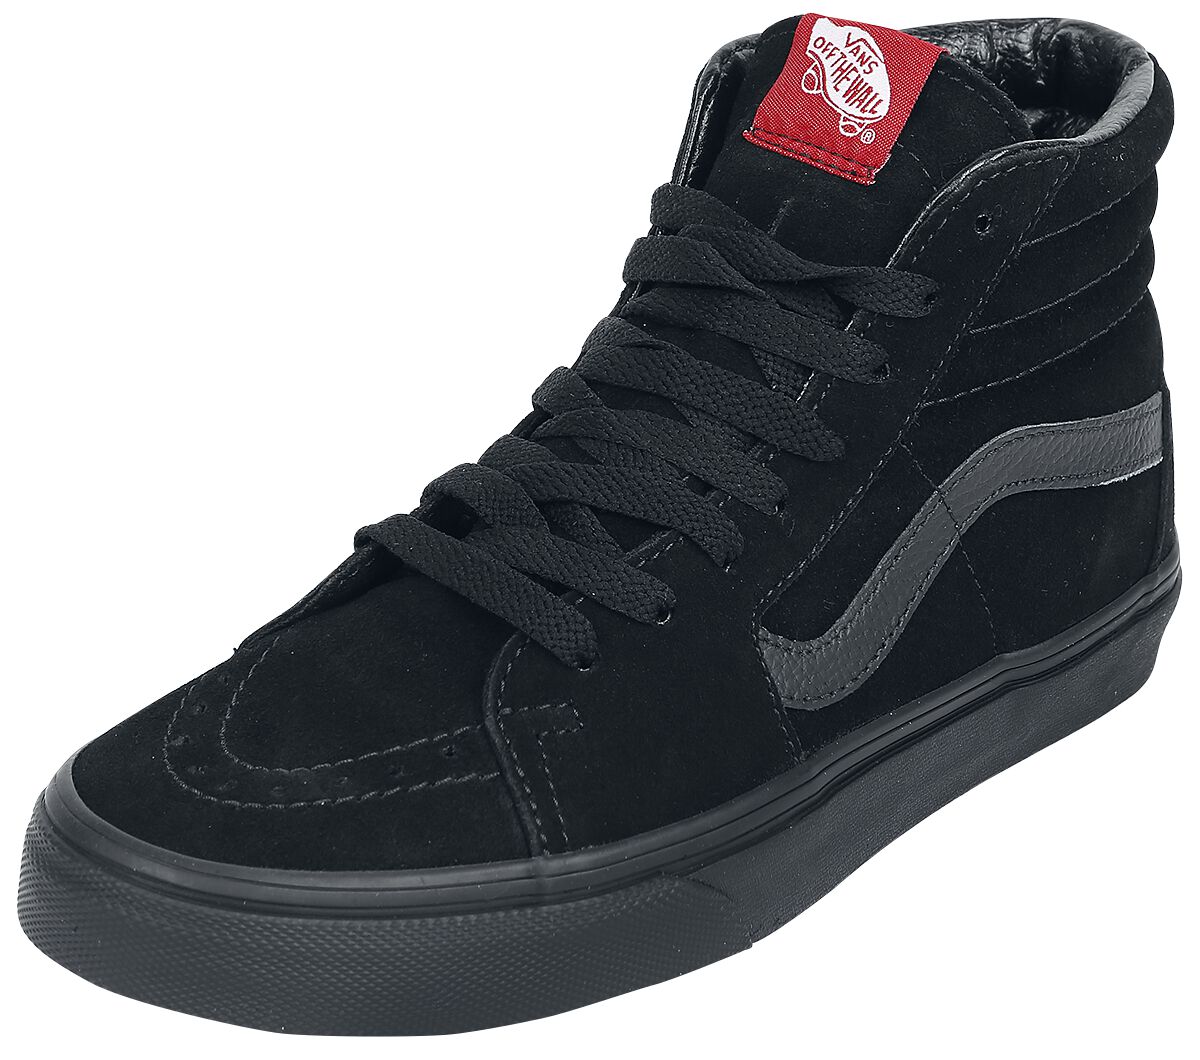 Vans Sneaker high - SK8-Hi - EU38 bis EU47 - Größe EU47 - schwarz/schwarz